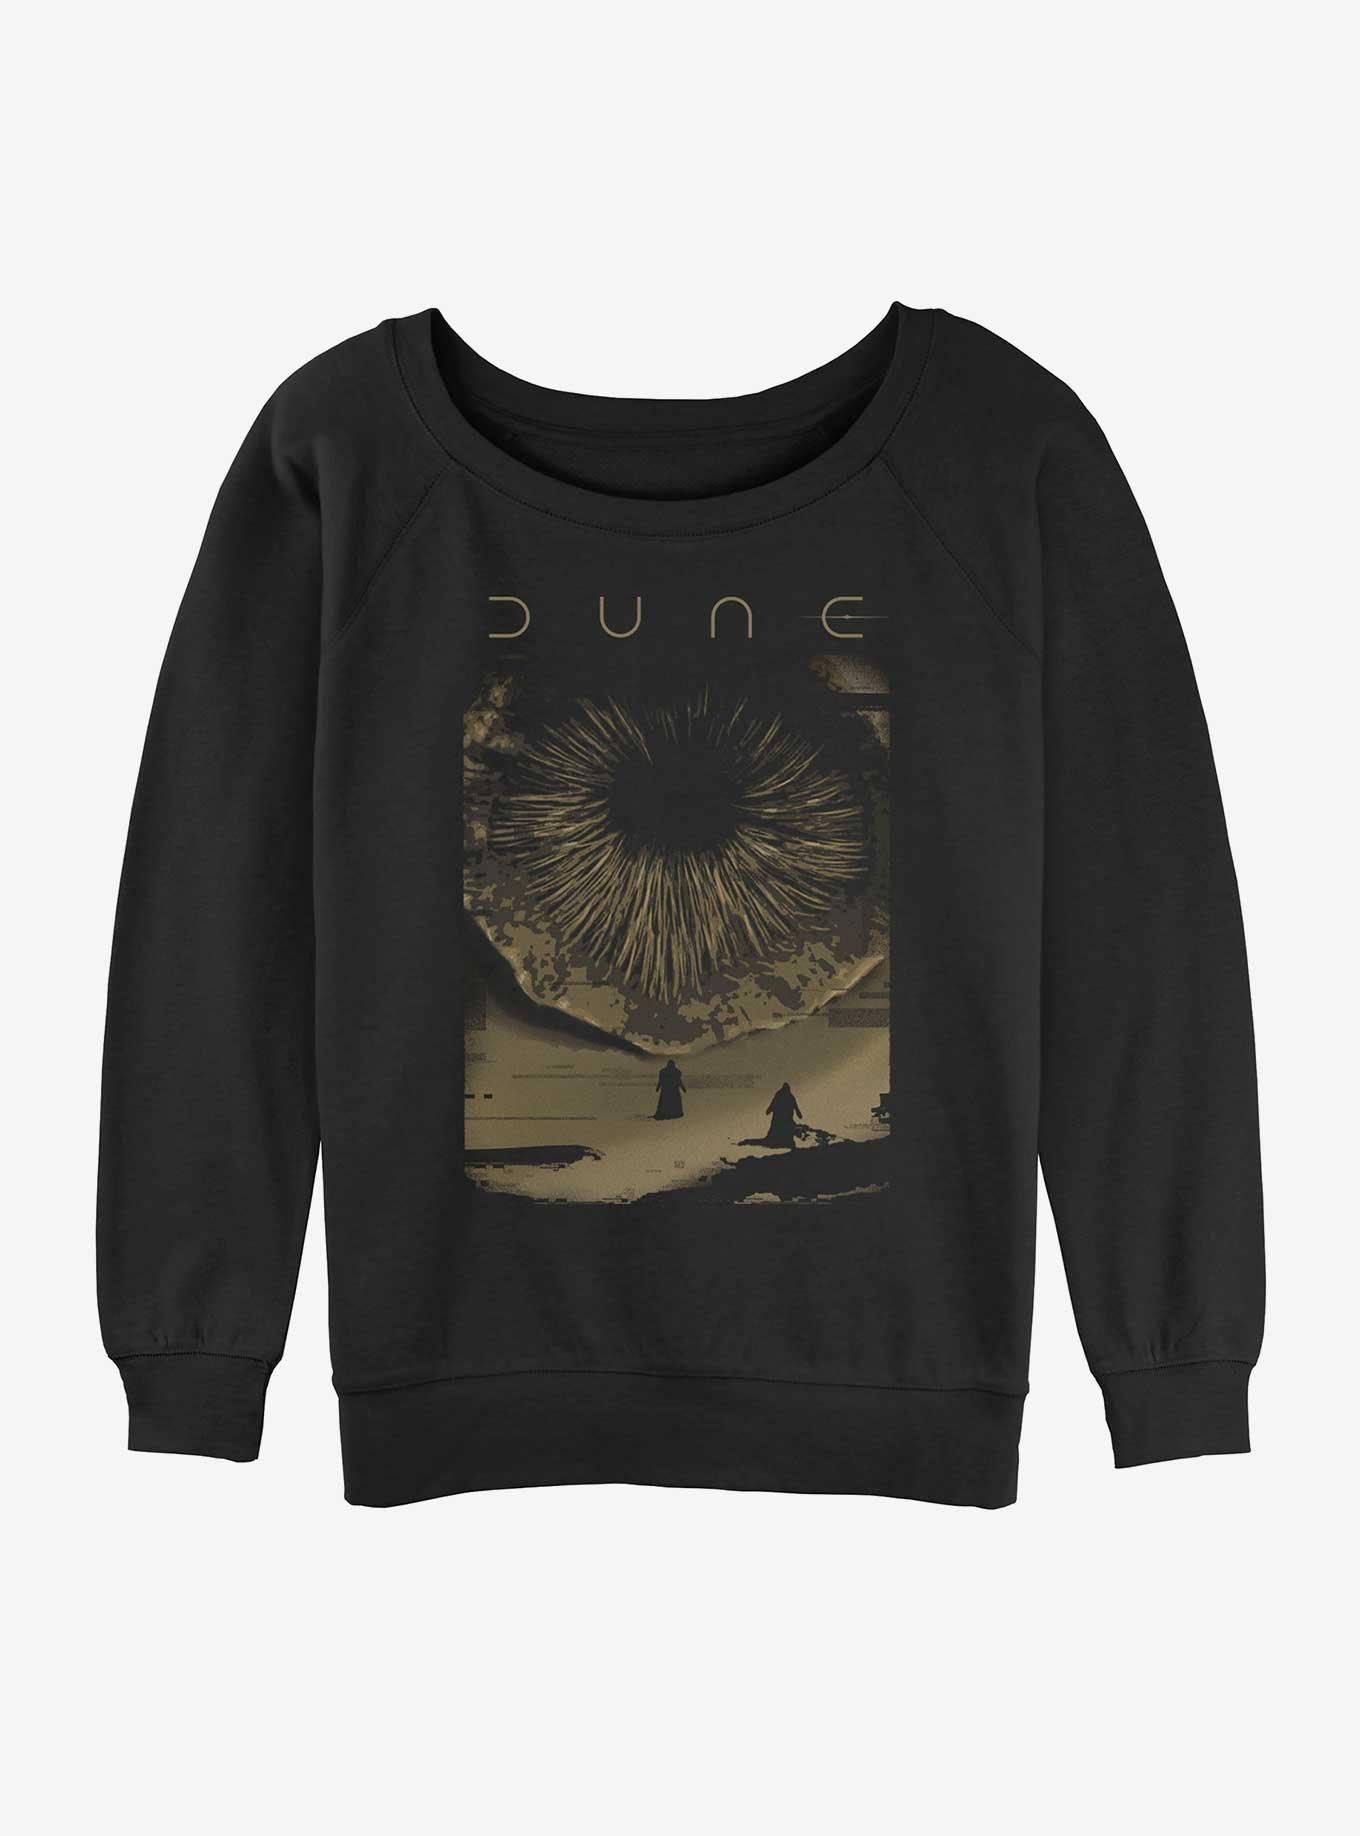 Dune: Part Two Shai-Hulud Poster Girls Slouchy Sweatshirt, BLACK, hi-res